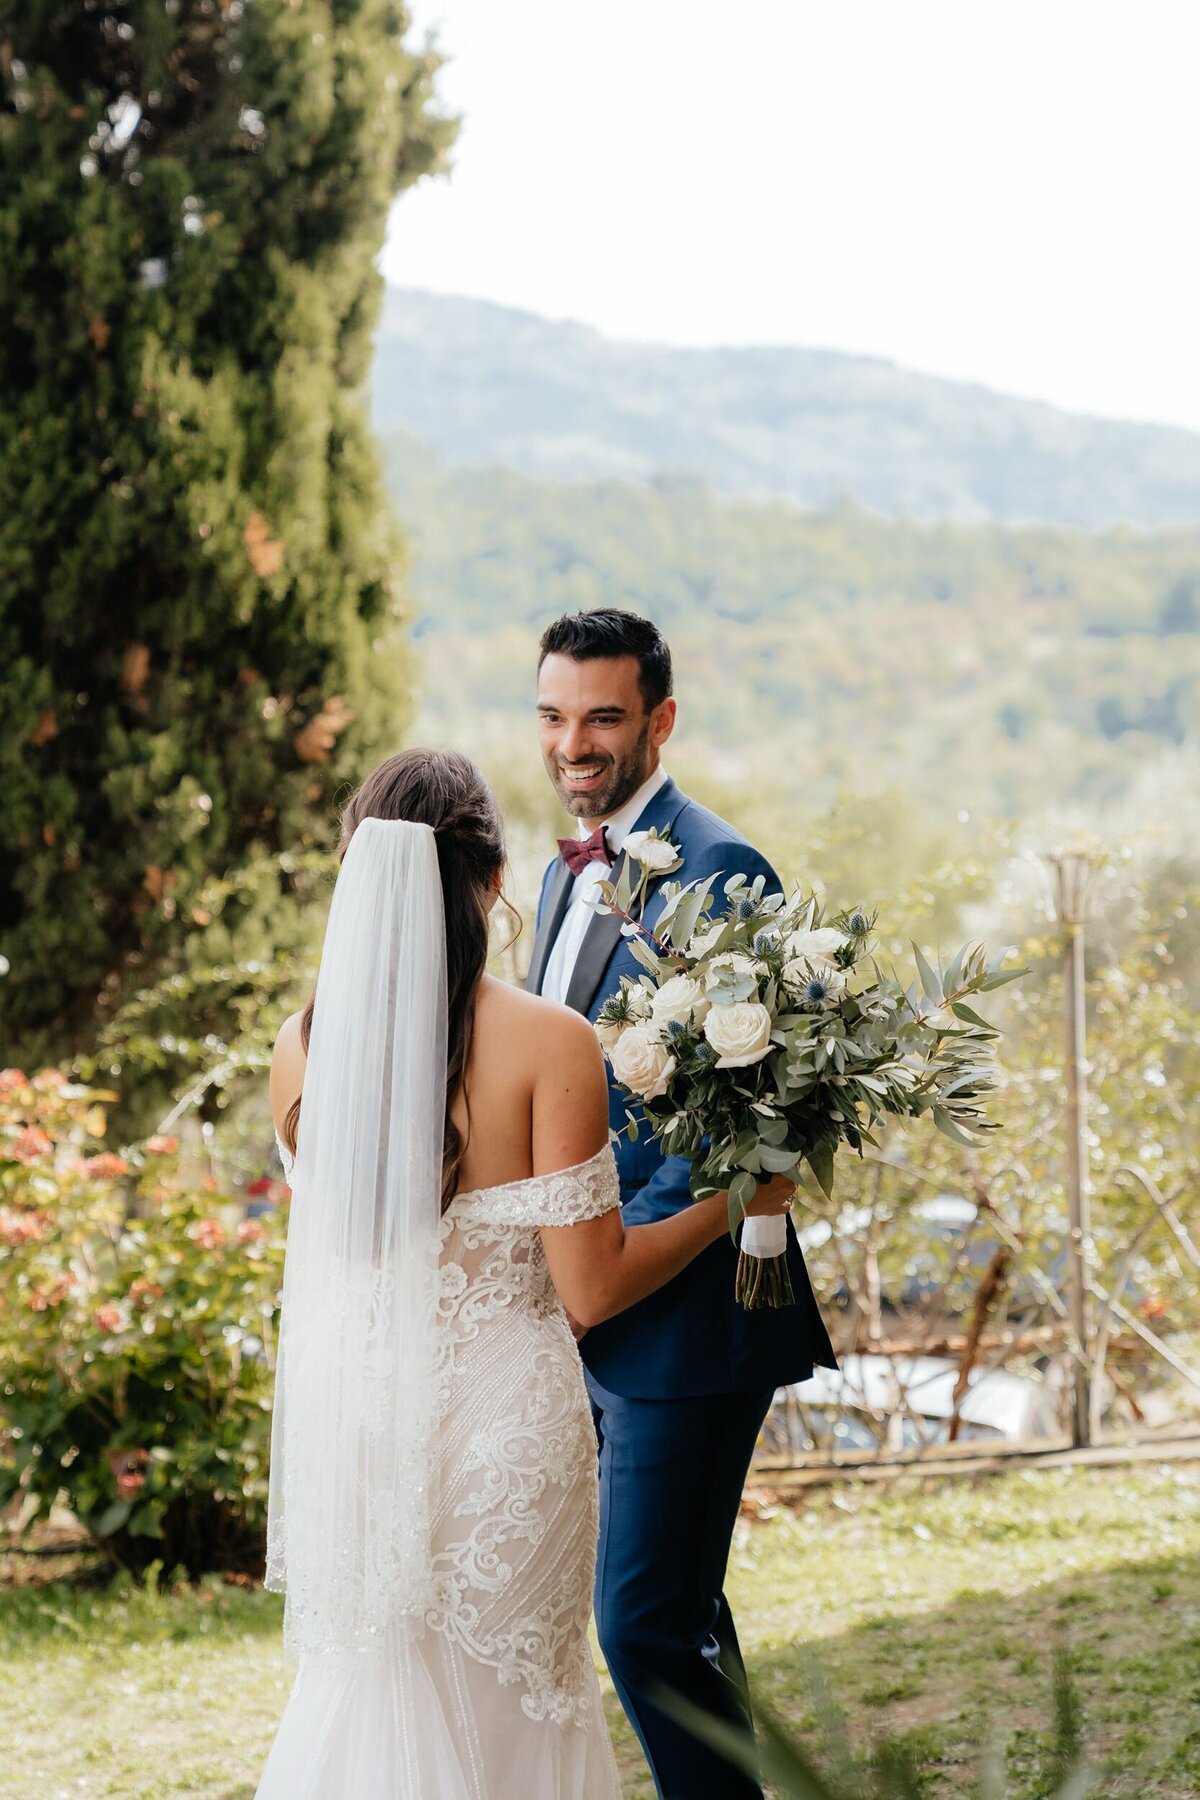 Pete-and-Brenna-Tuscany-Italy-Destination-Wedding-25